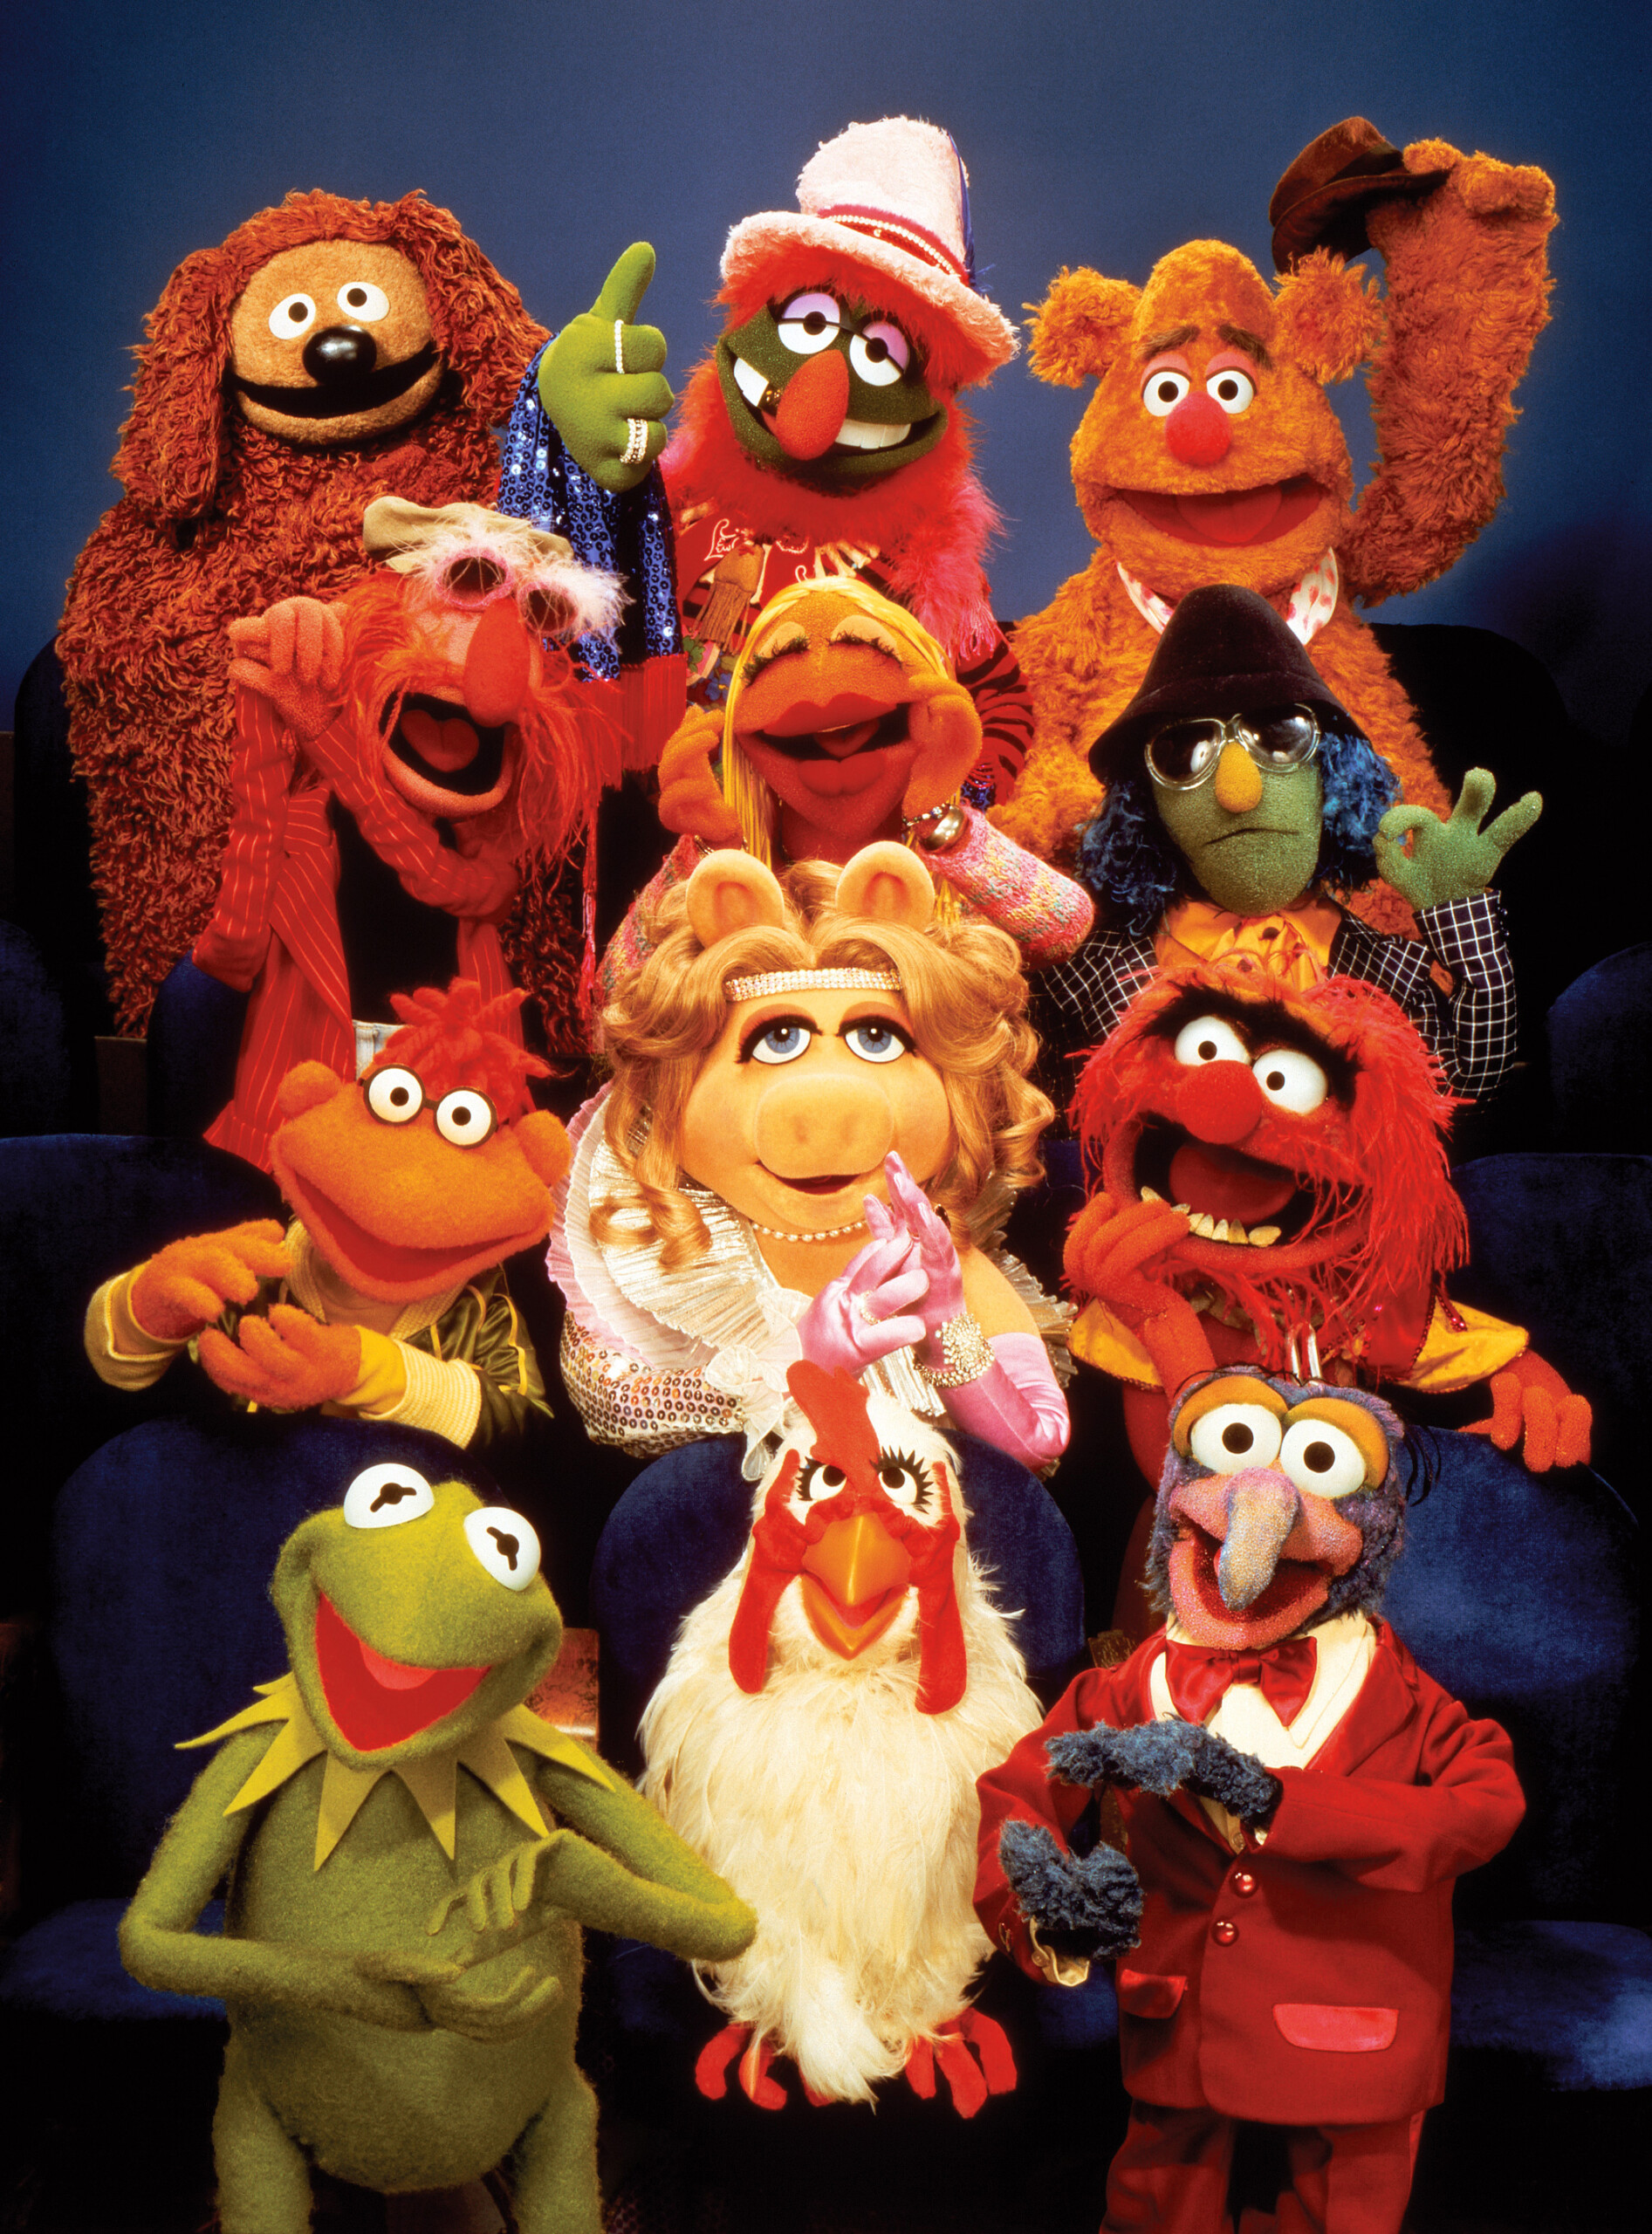 The muppet show the muppet show | Sticker